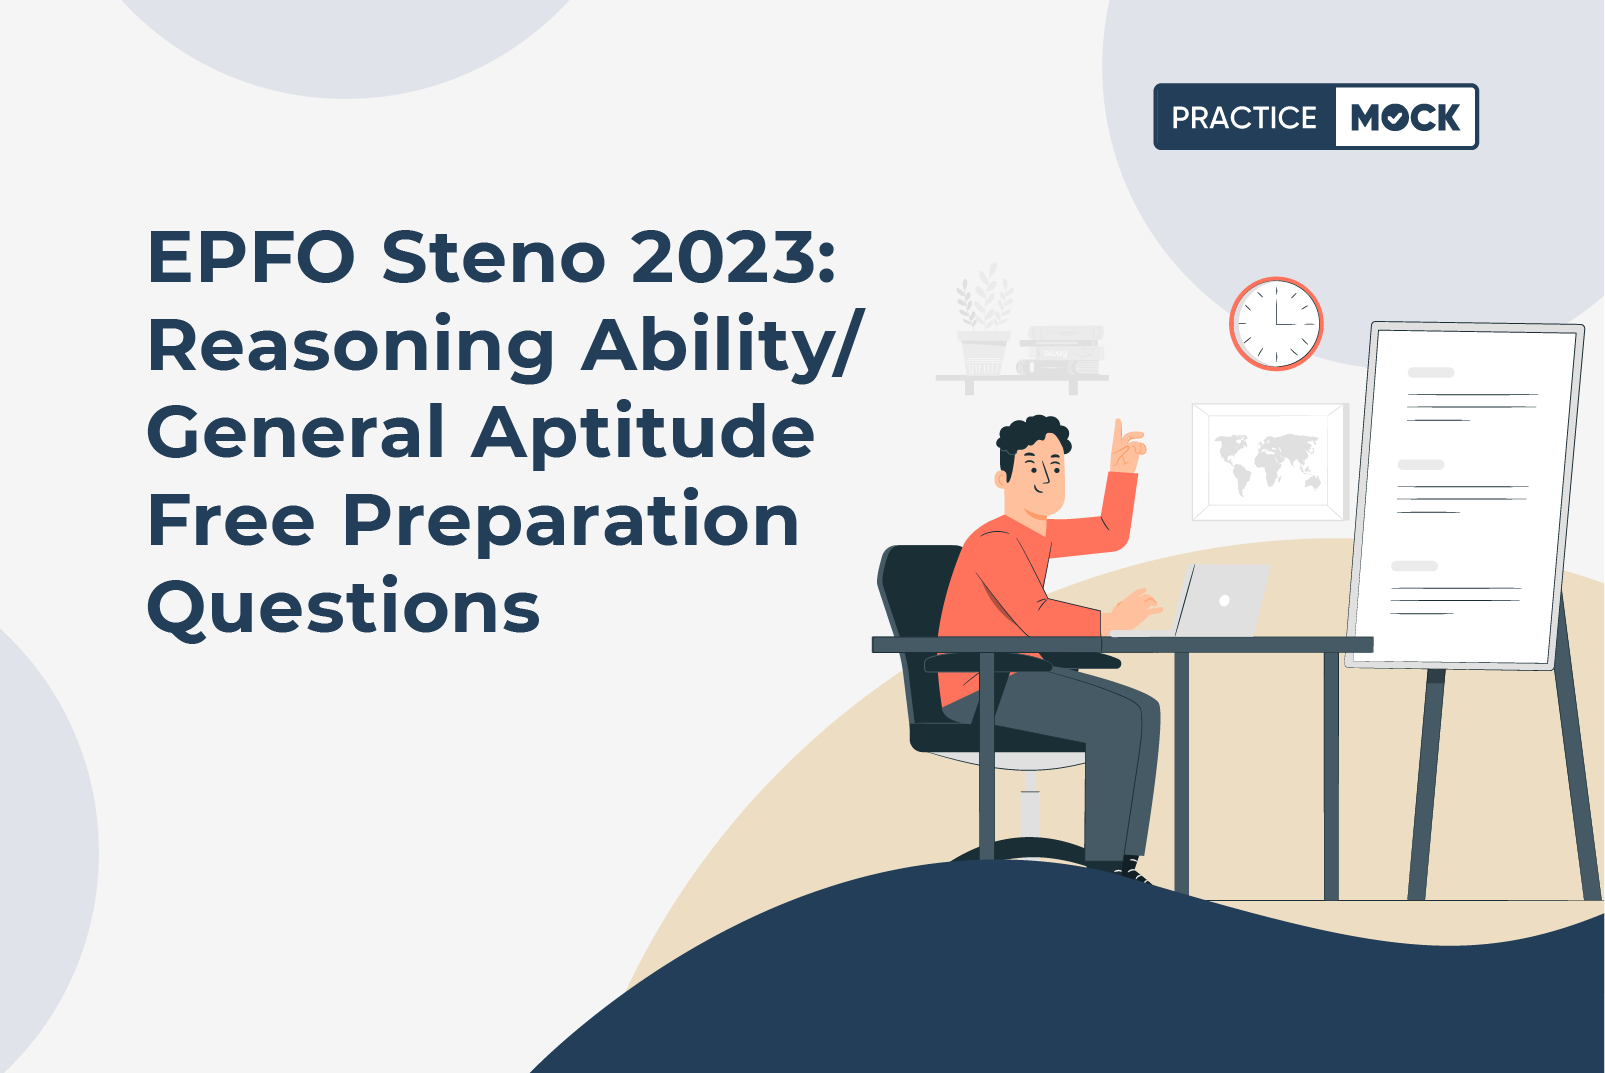 EPFO Steno Reasoning Free Preparation